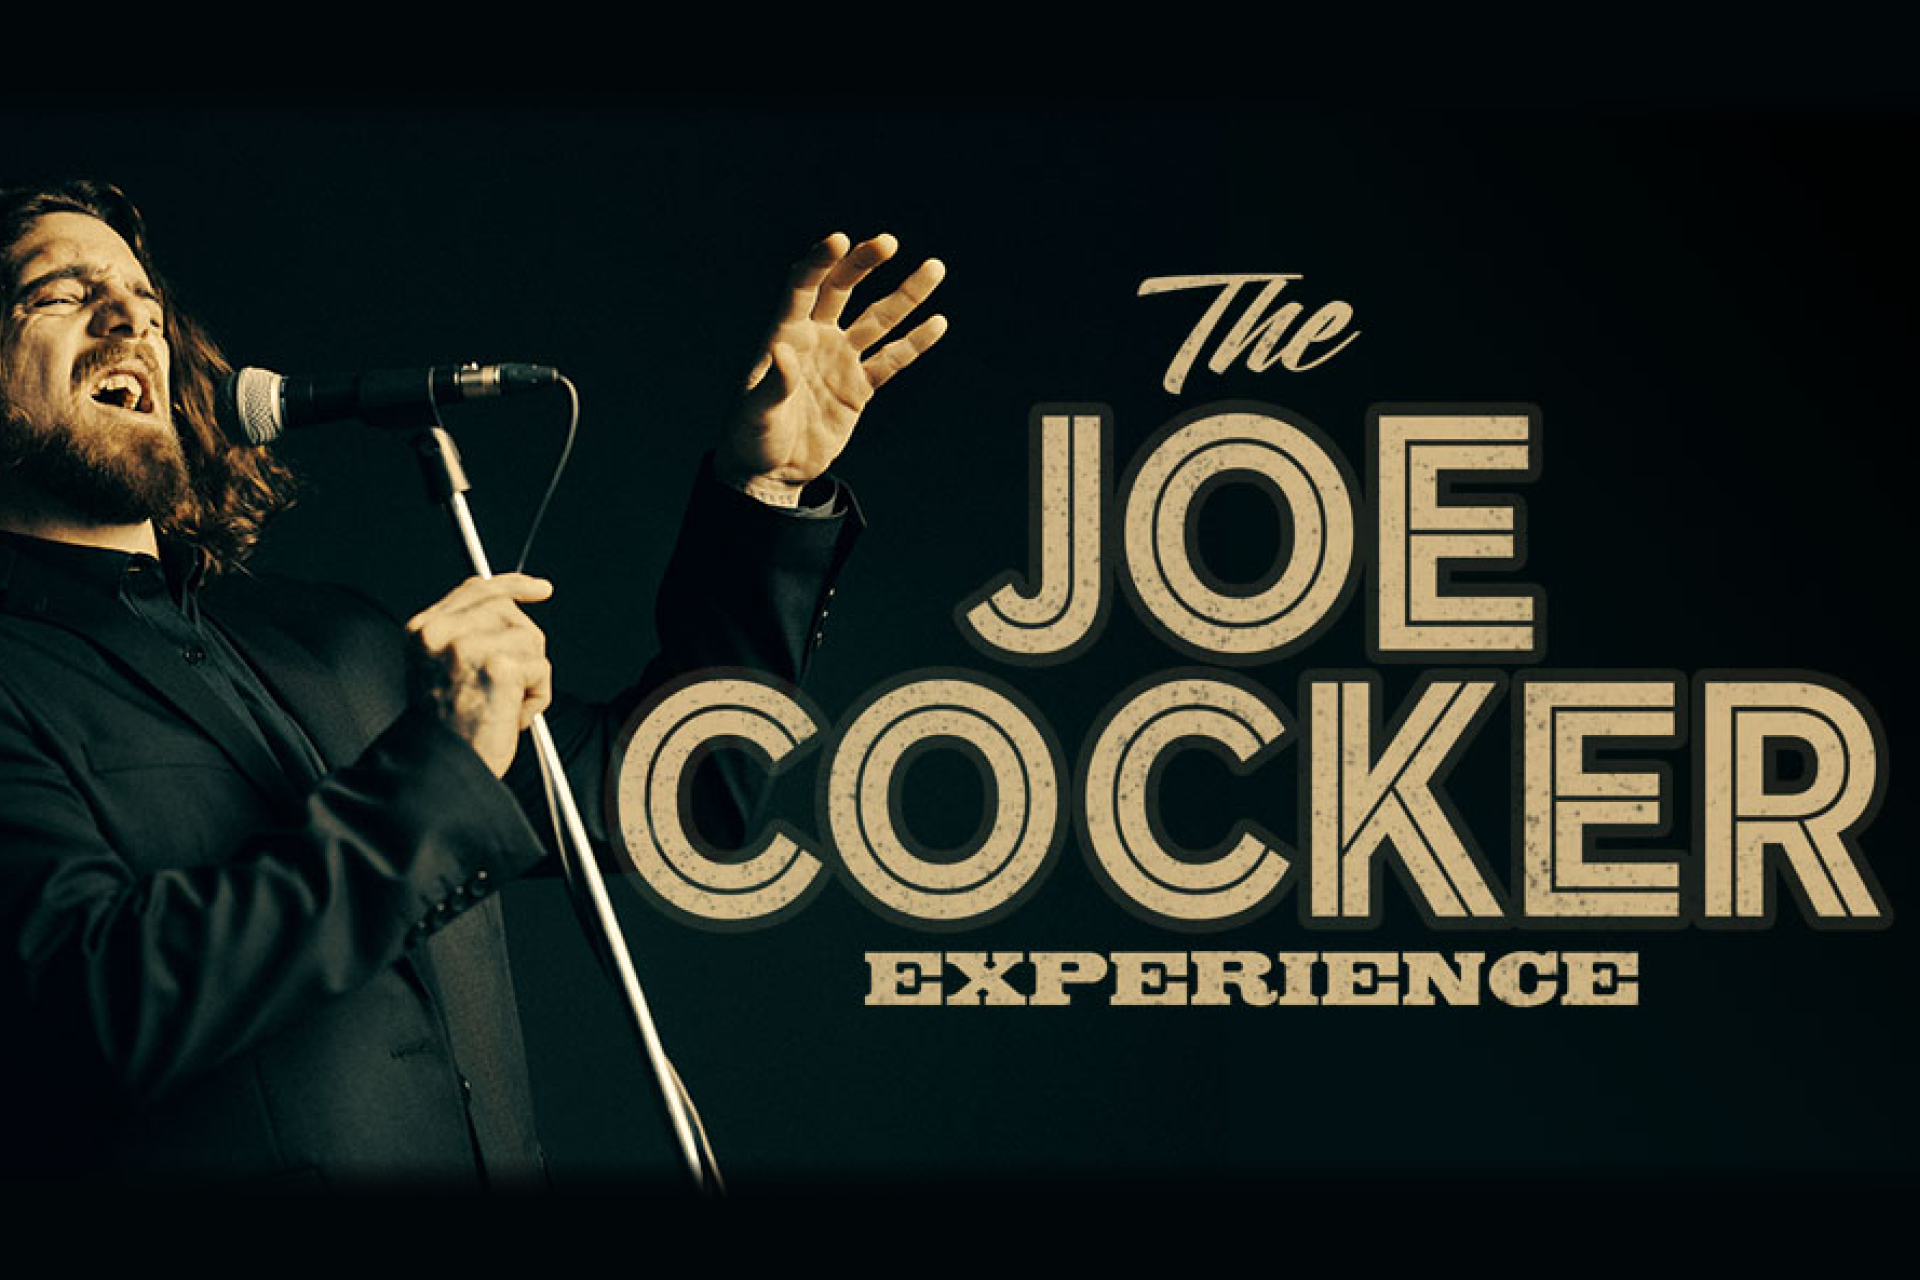 Joe Cocker Experience